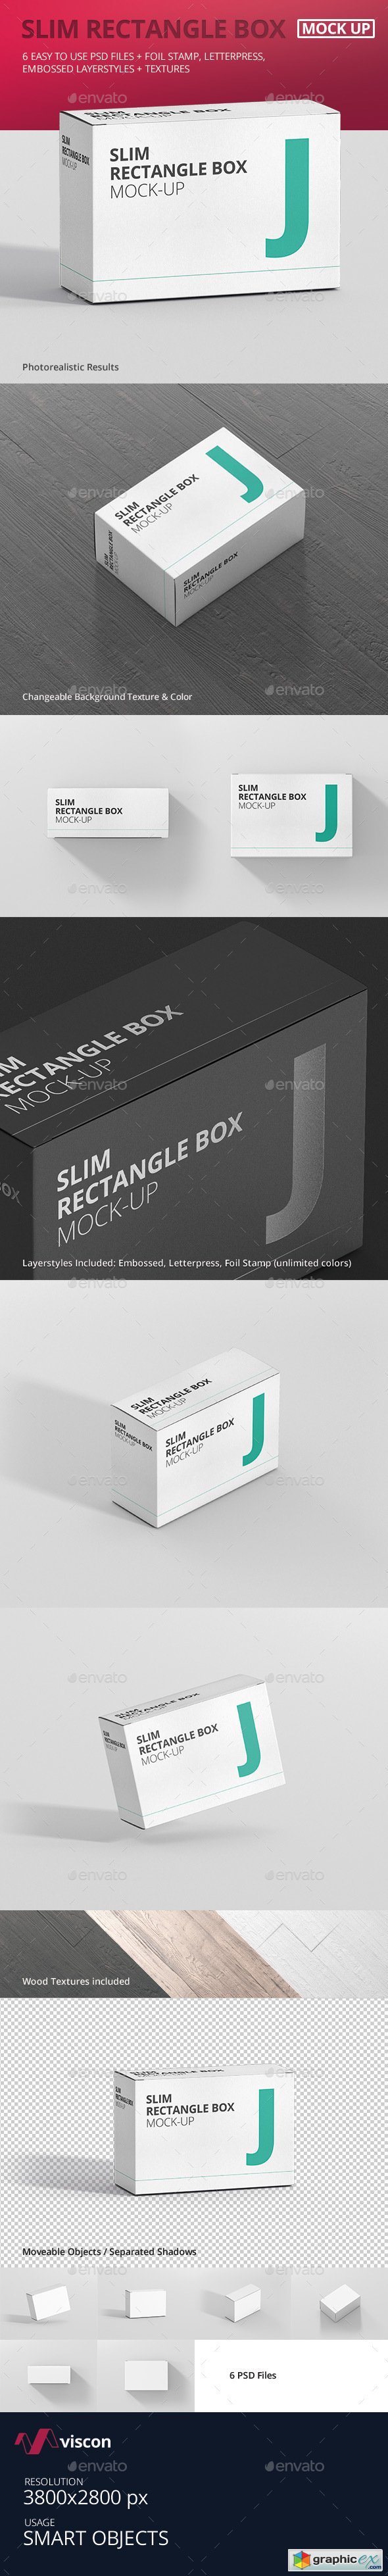 Package Box Mockup - Slim Rectangle